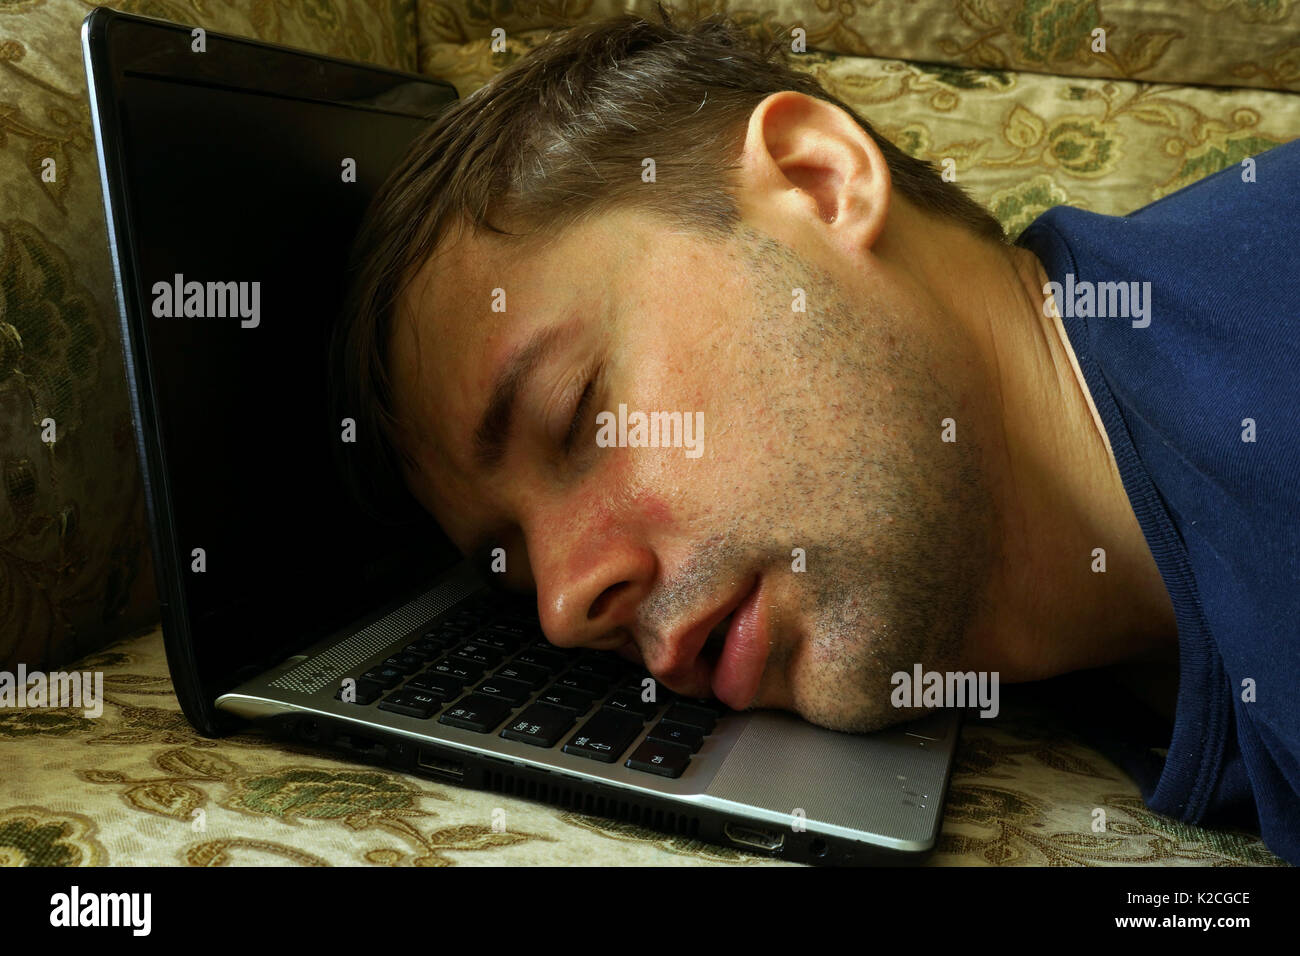 Overworked freelancer sleep on a laptop. Stock Photo